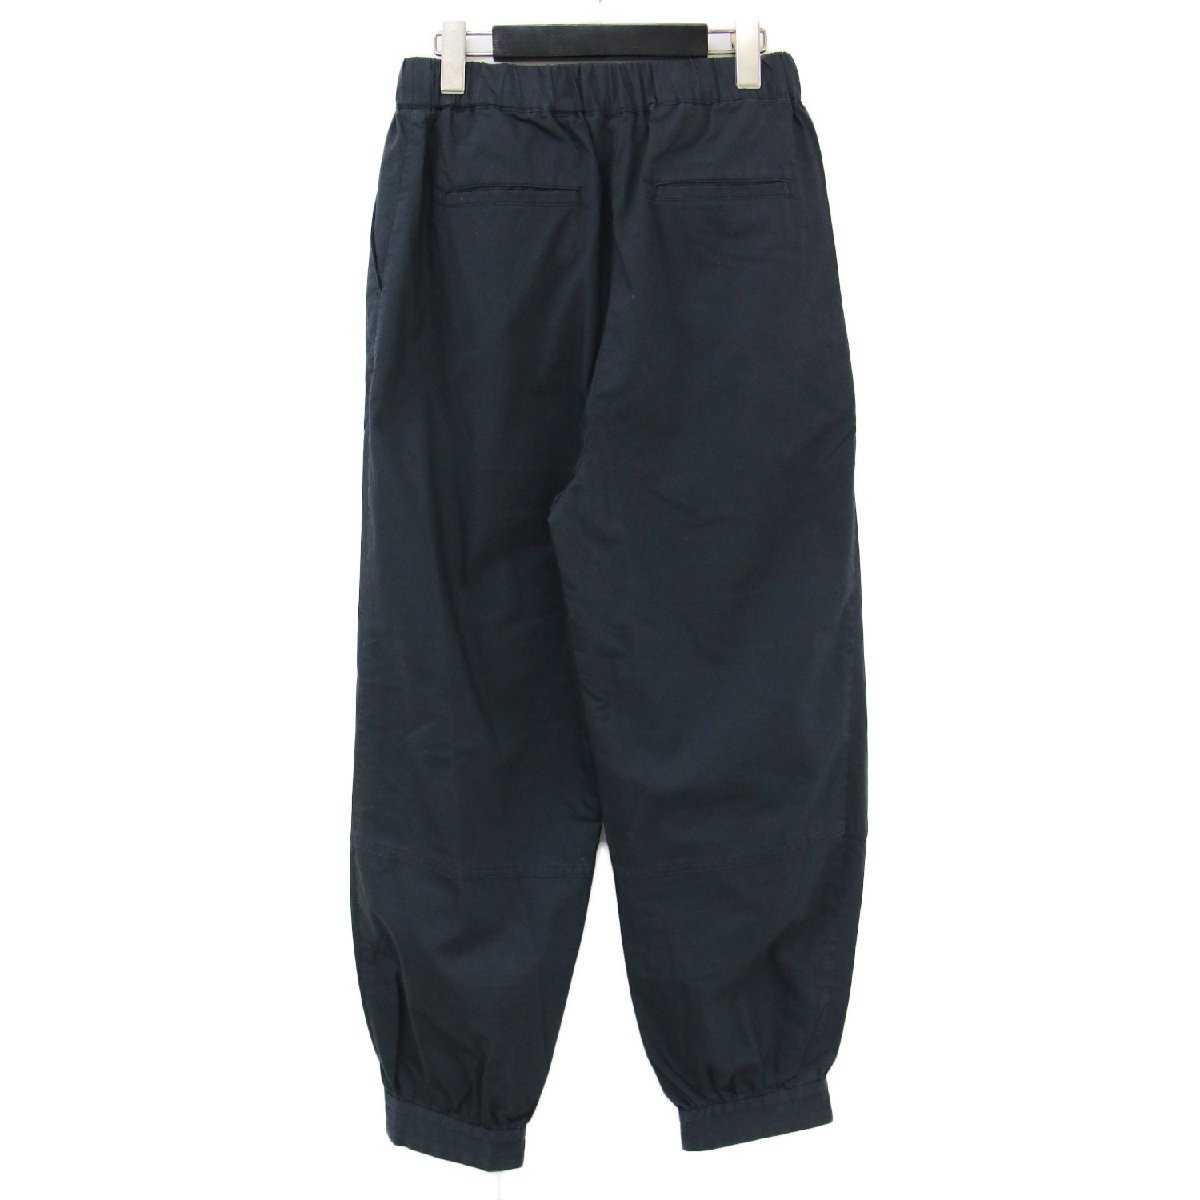 FLORENT Florent pants jogger pants navy navy blue 34(XS) Easy pants hem aperture stop high waist stretch bottoms trousers 